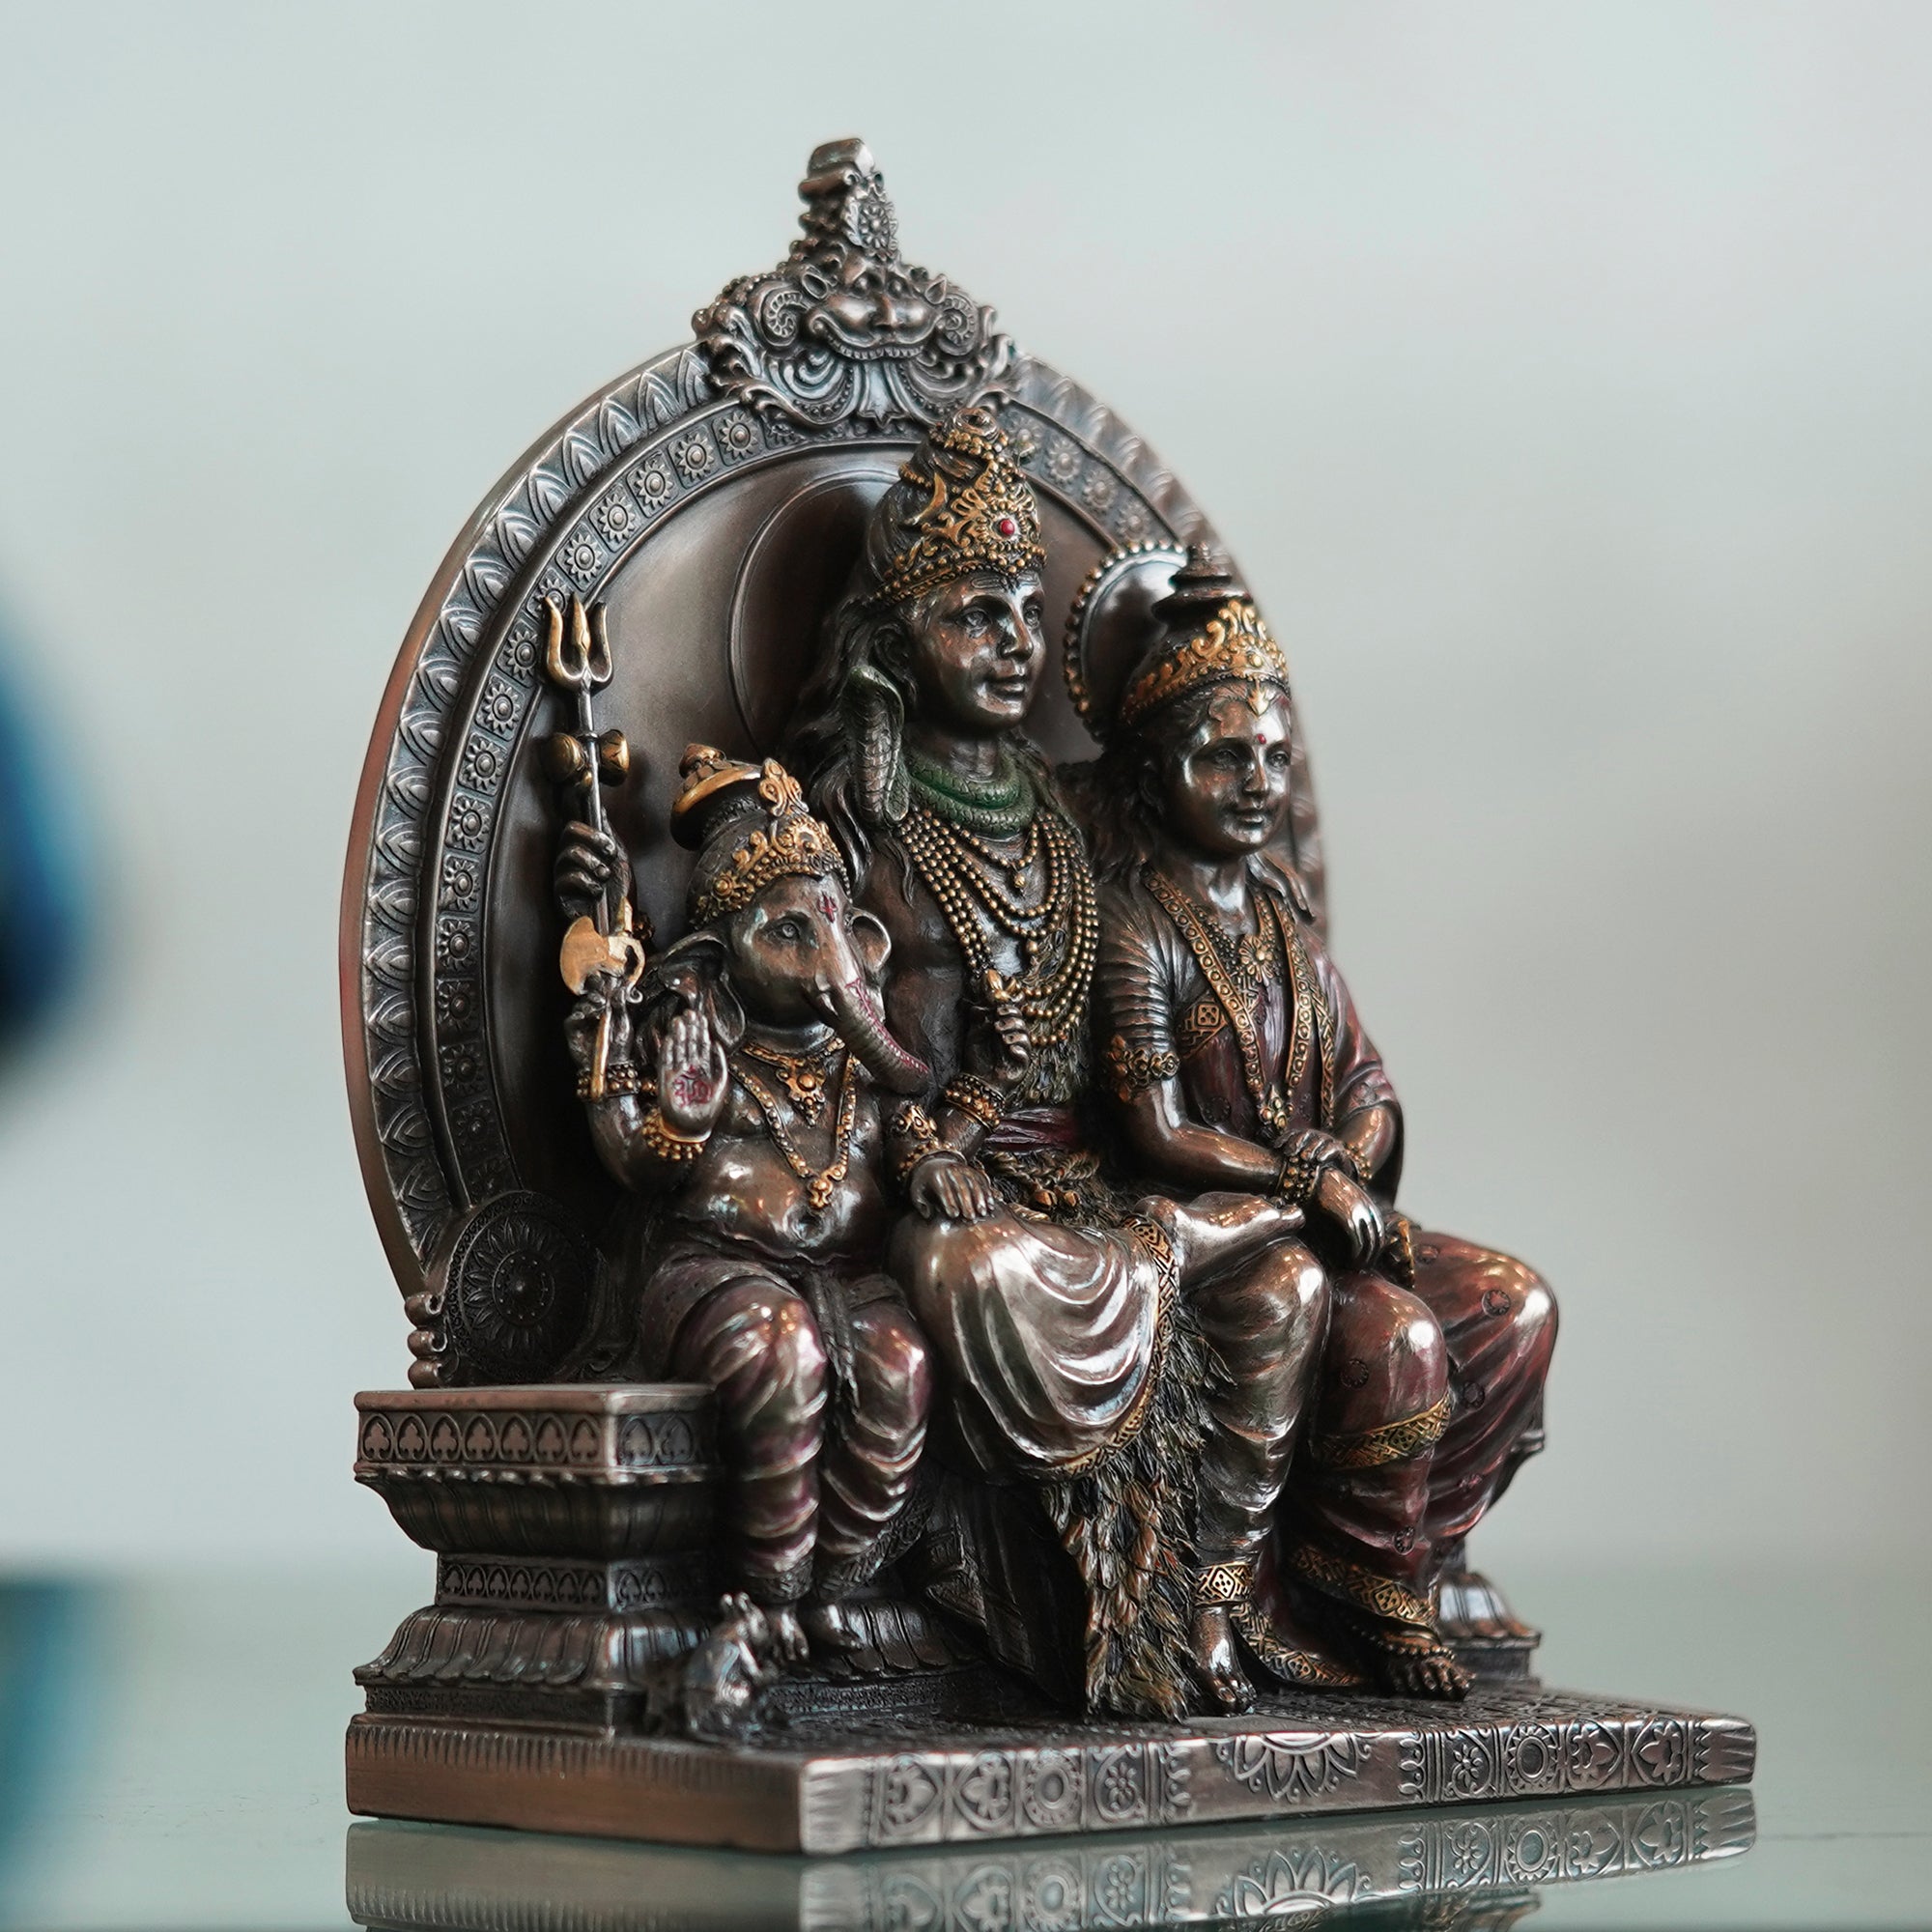 Deveie Crafts Sitting Lord Shiva Family Statue, Lord Shiva Family Idol Hindu God Figurine Ganesh, Parvati, Shiv Statue - 21 cm (Bronze, Copper)